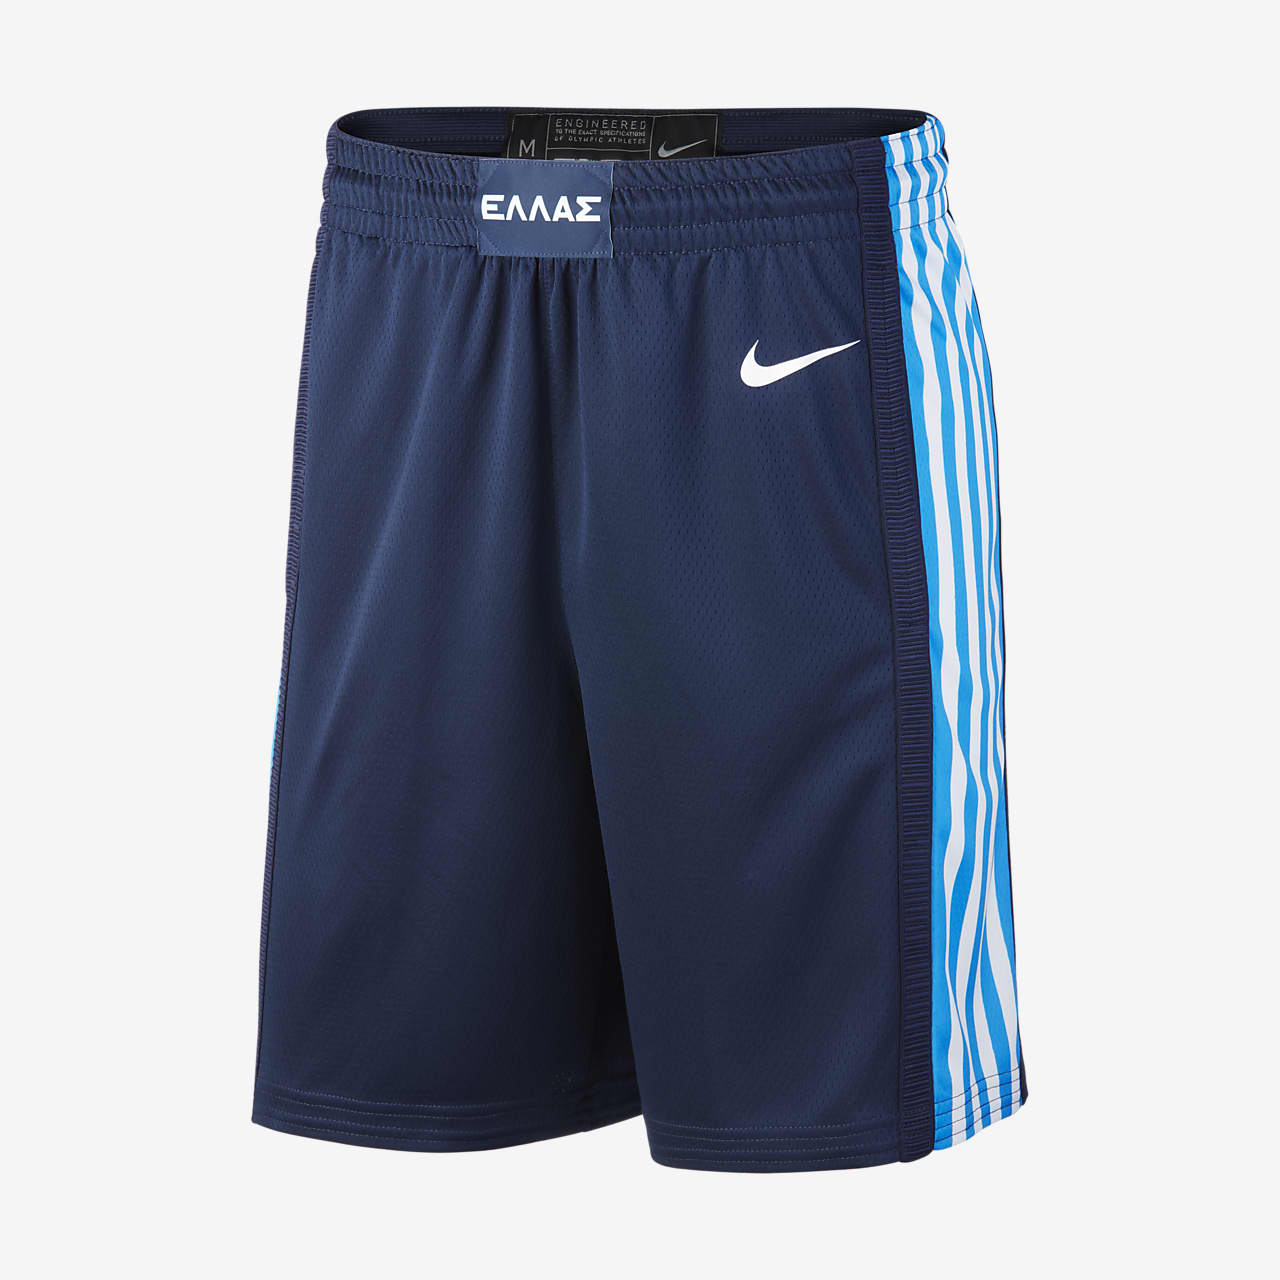 Greece Nike (Road) Limited Men's Basketball Shorts